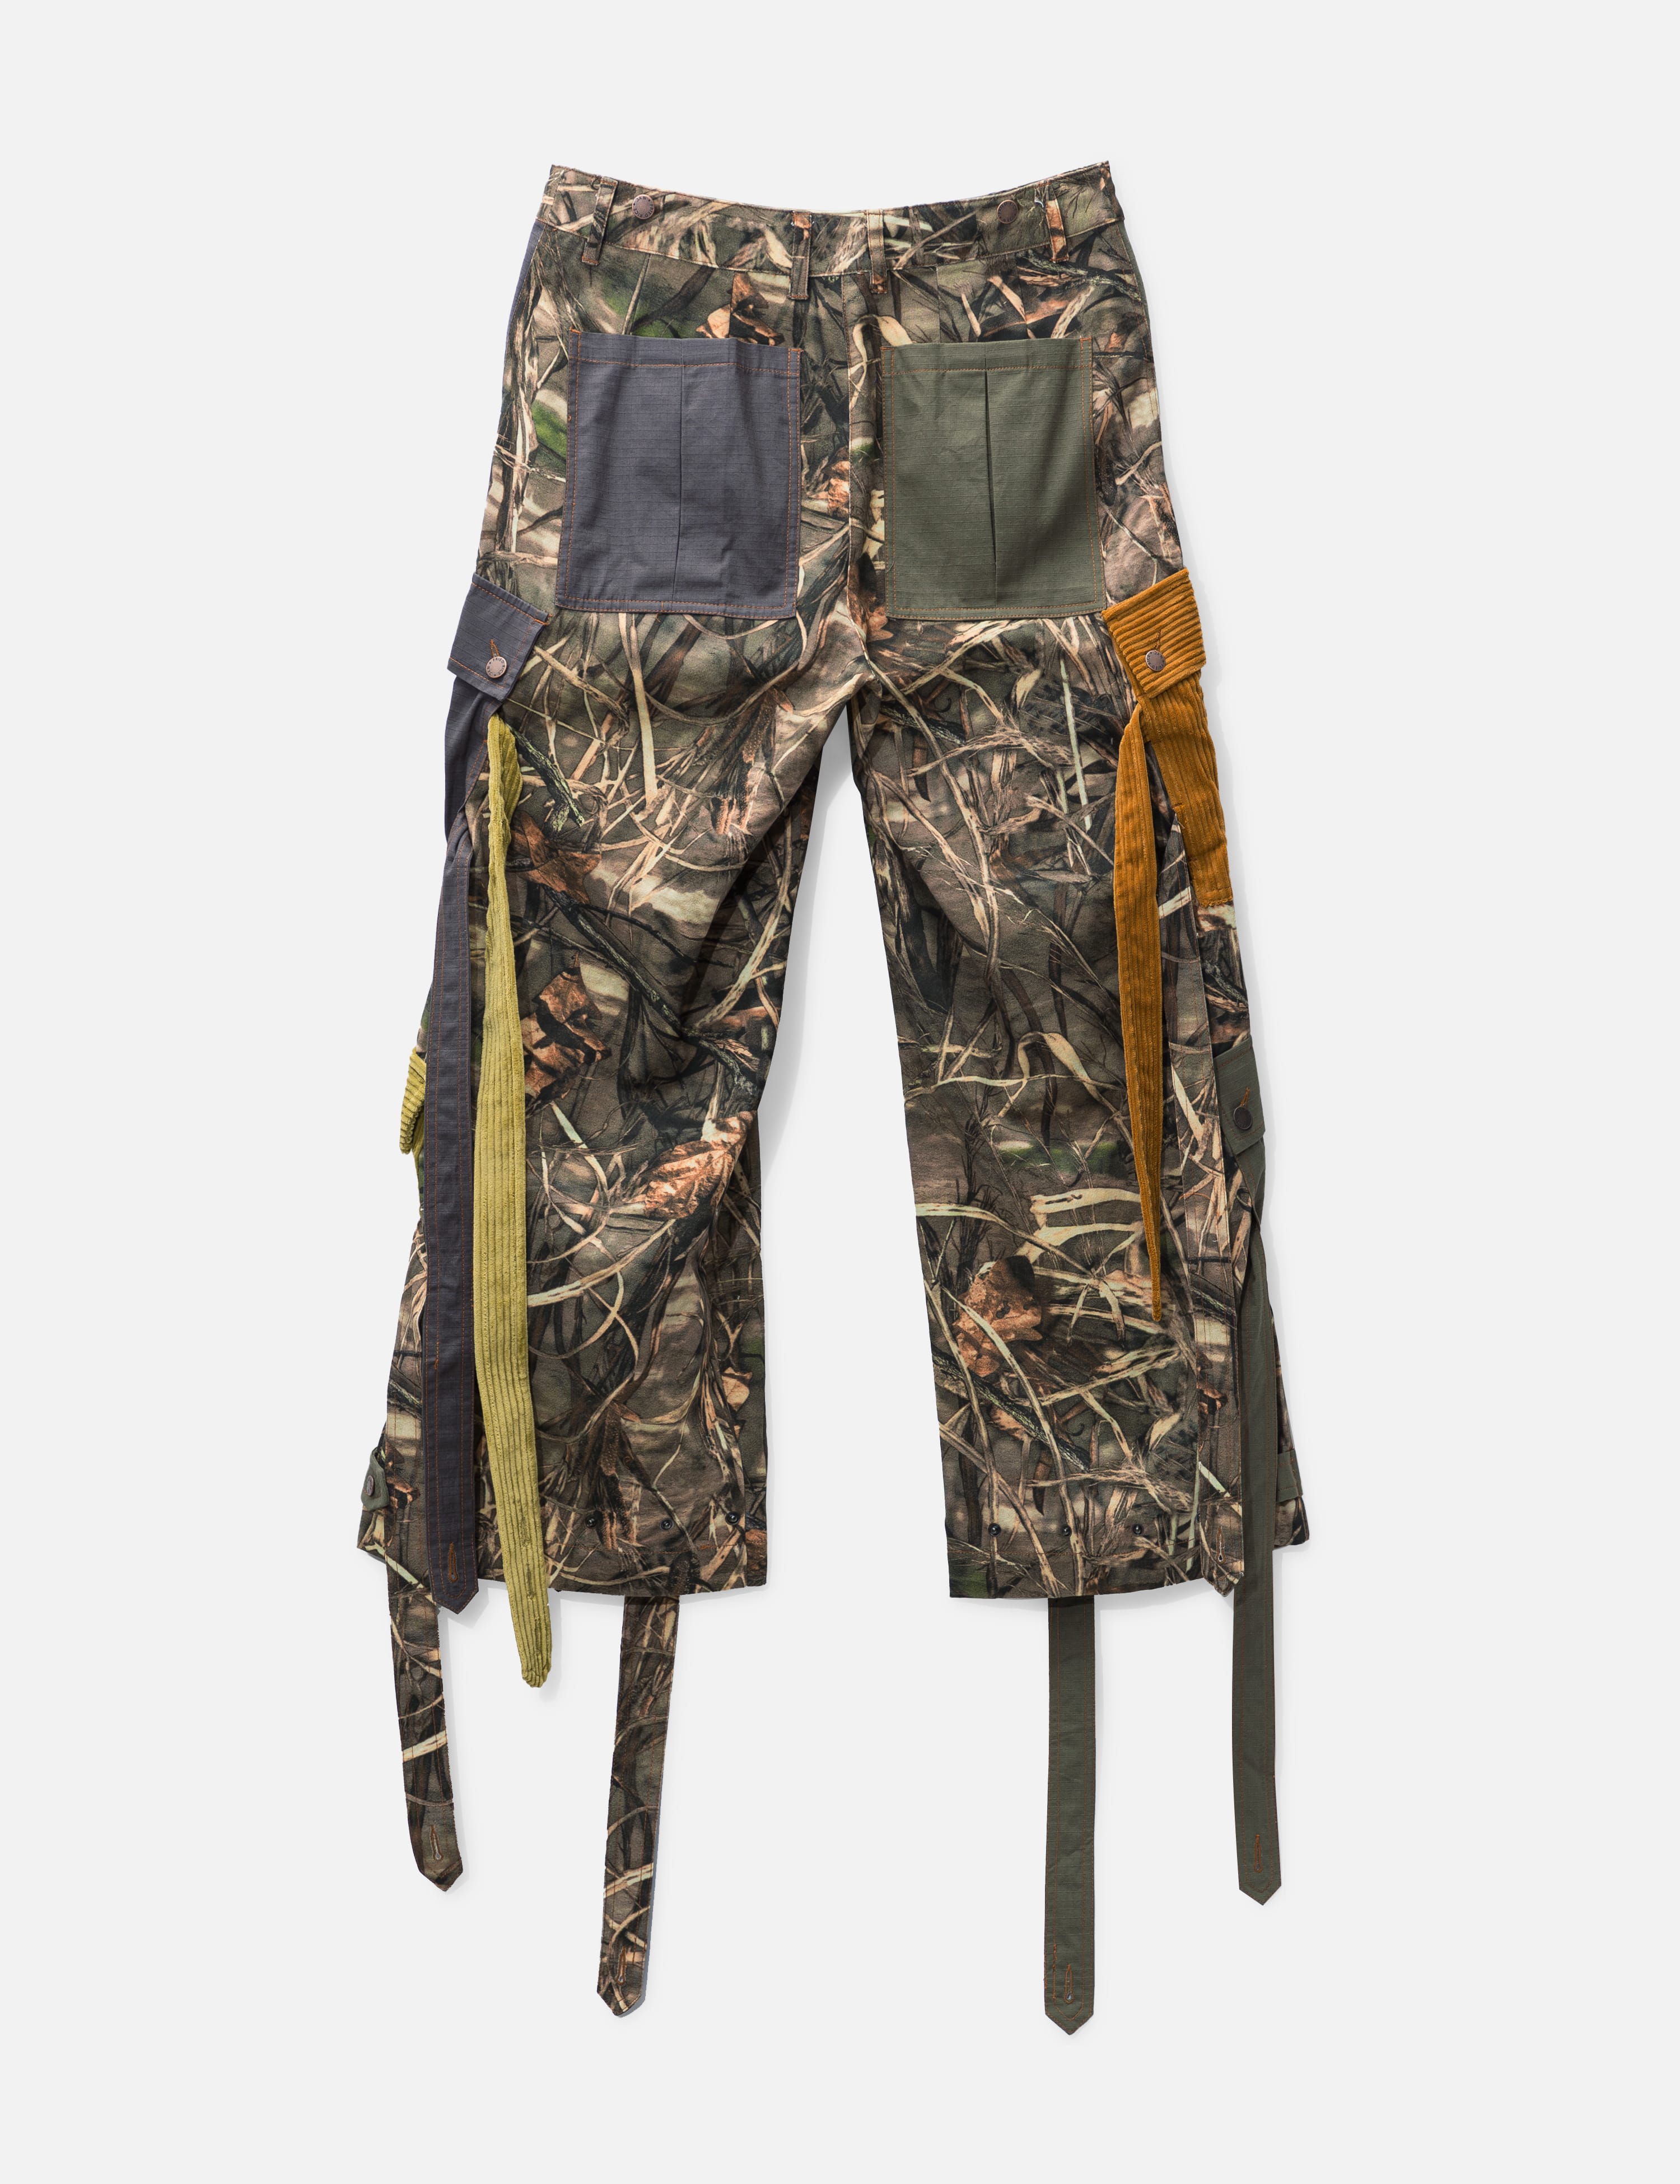 MEN'S CAMO CARGO TWILL STRETCH JOGGER PANTS (S-5XL) 5 COLORS * VICTORIOUS *  | eBay